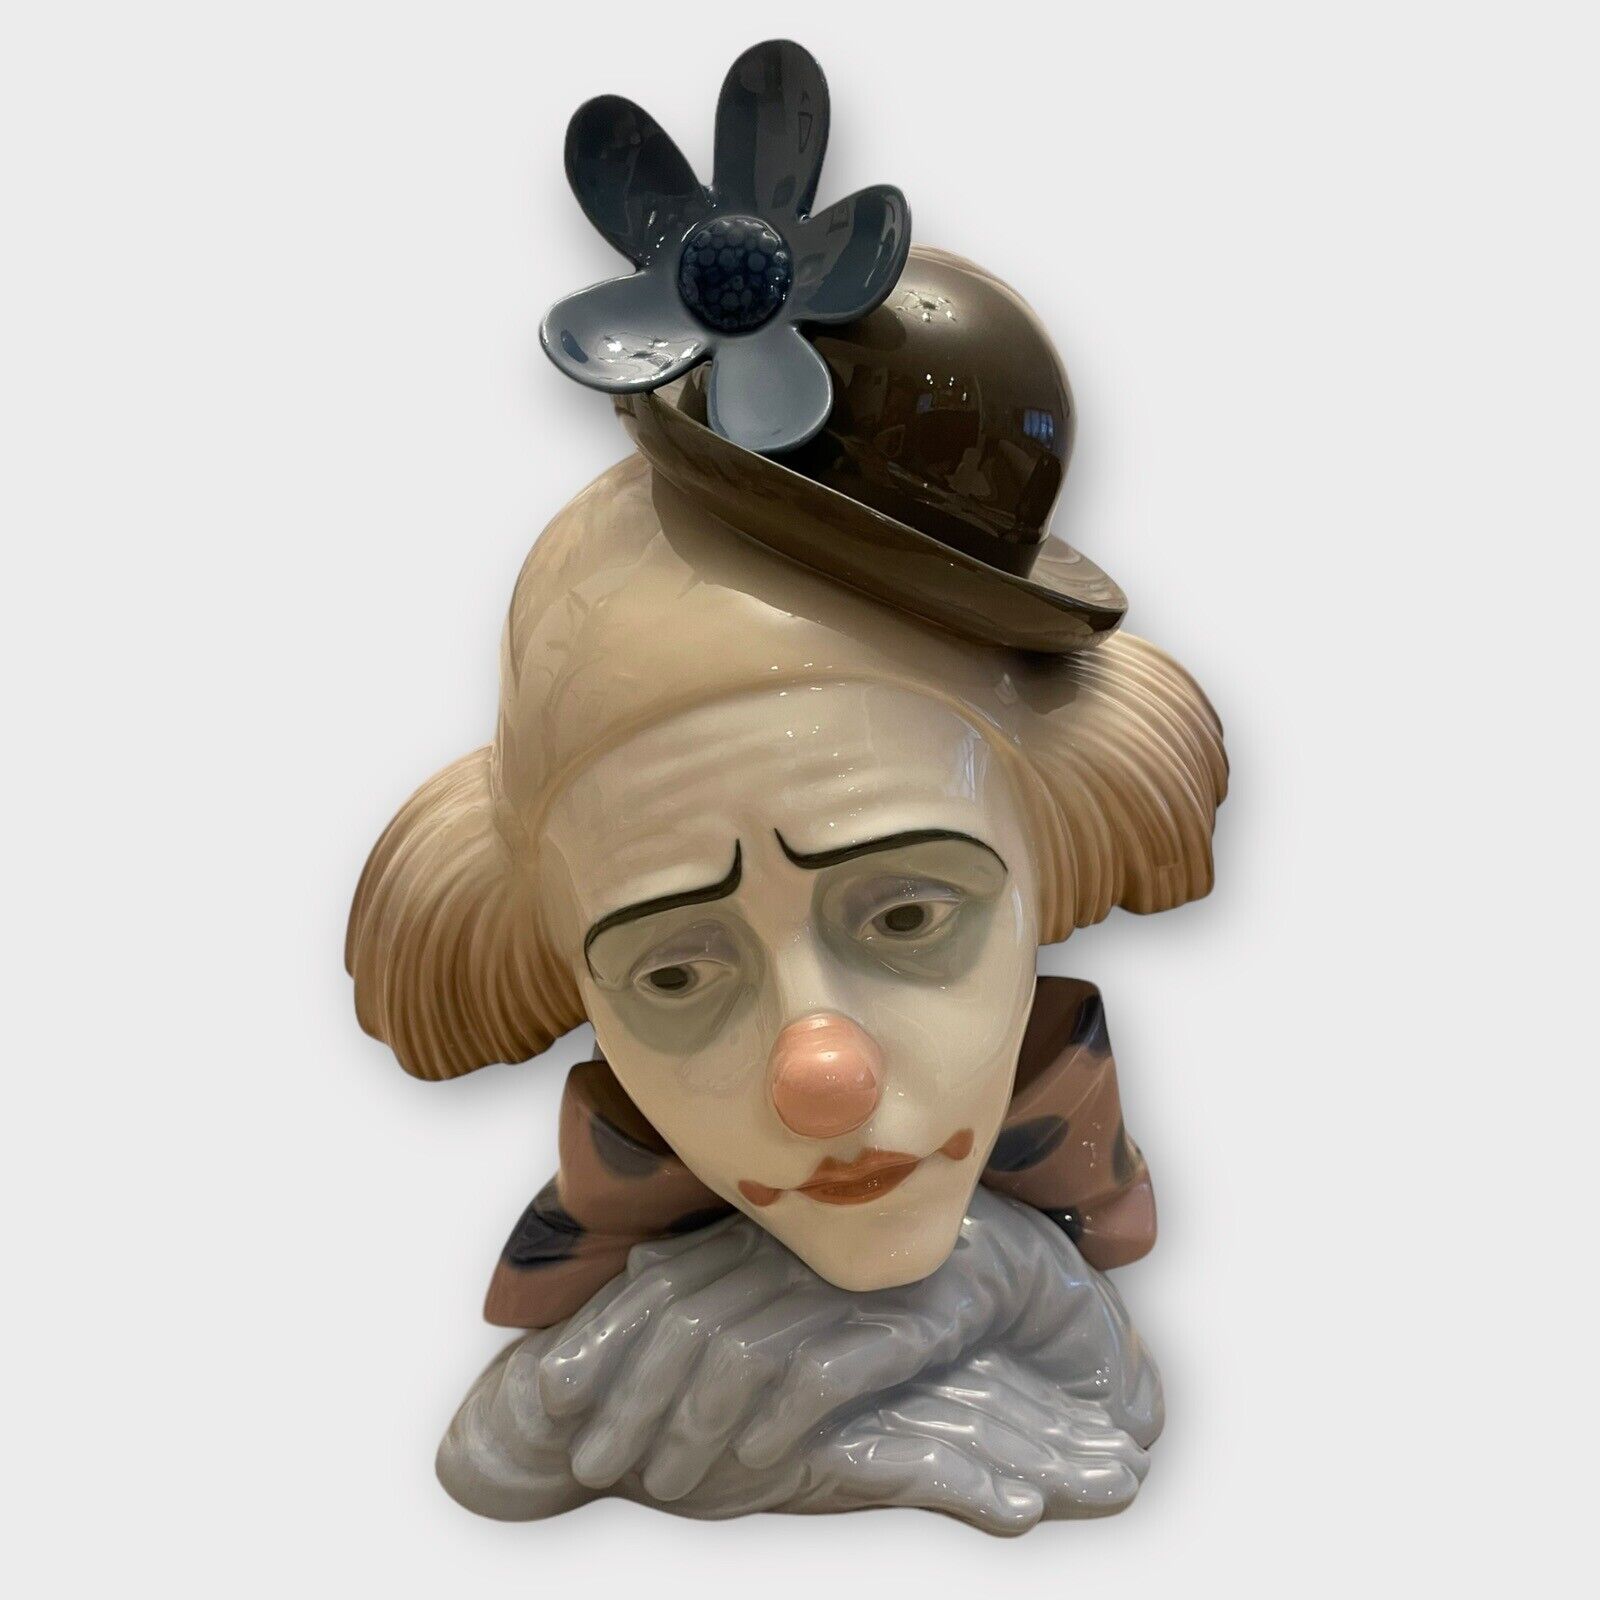 Vintage Lladro Pensive Clown Figurine Jester Head Bust 1981 Porcelain Spain#5130